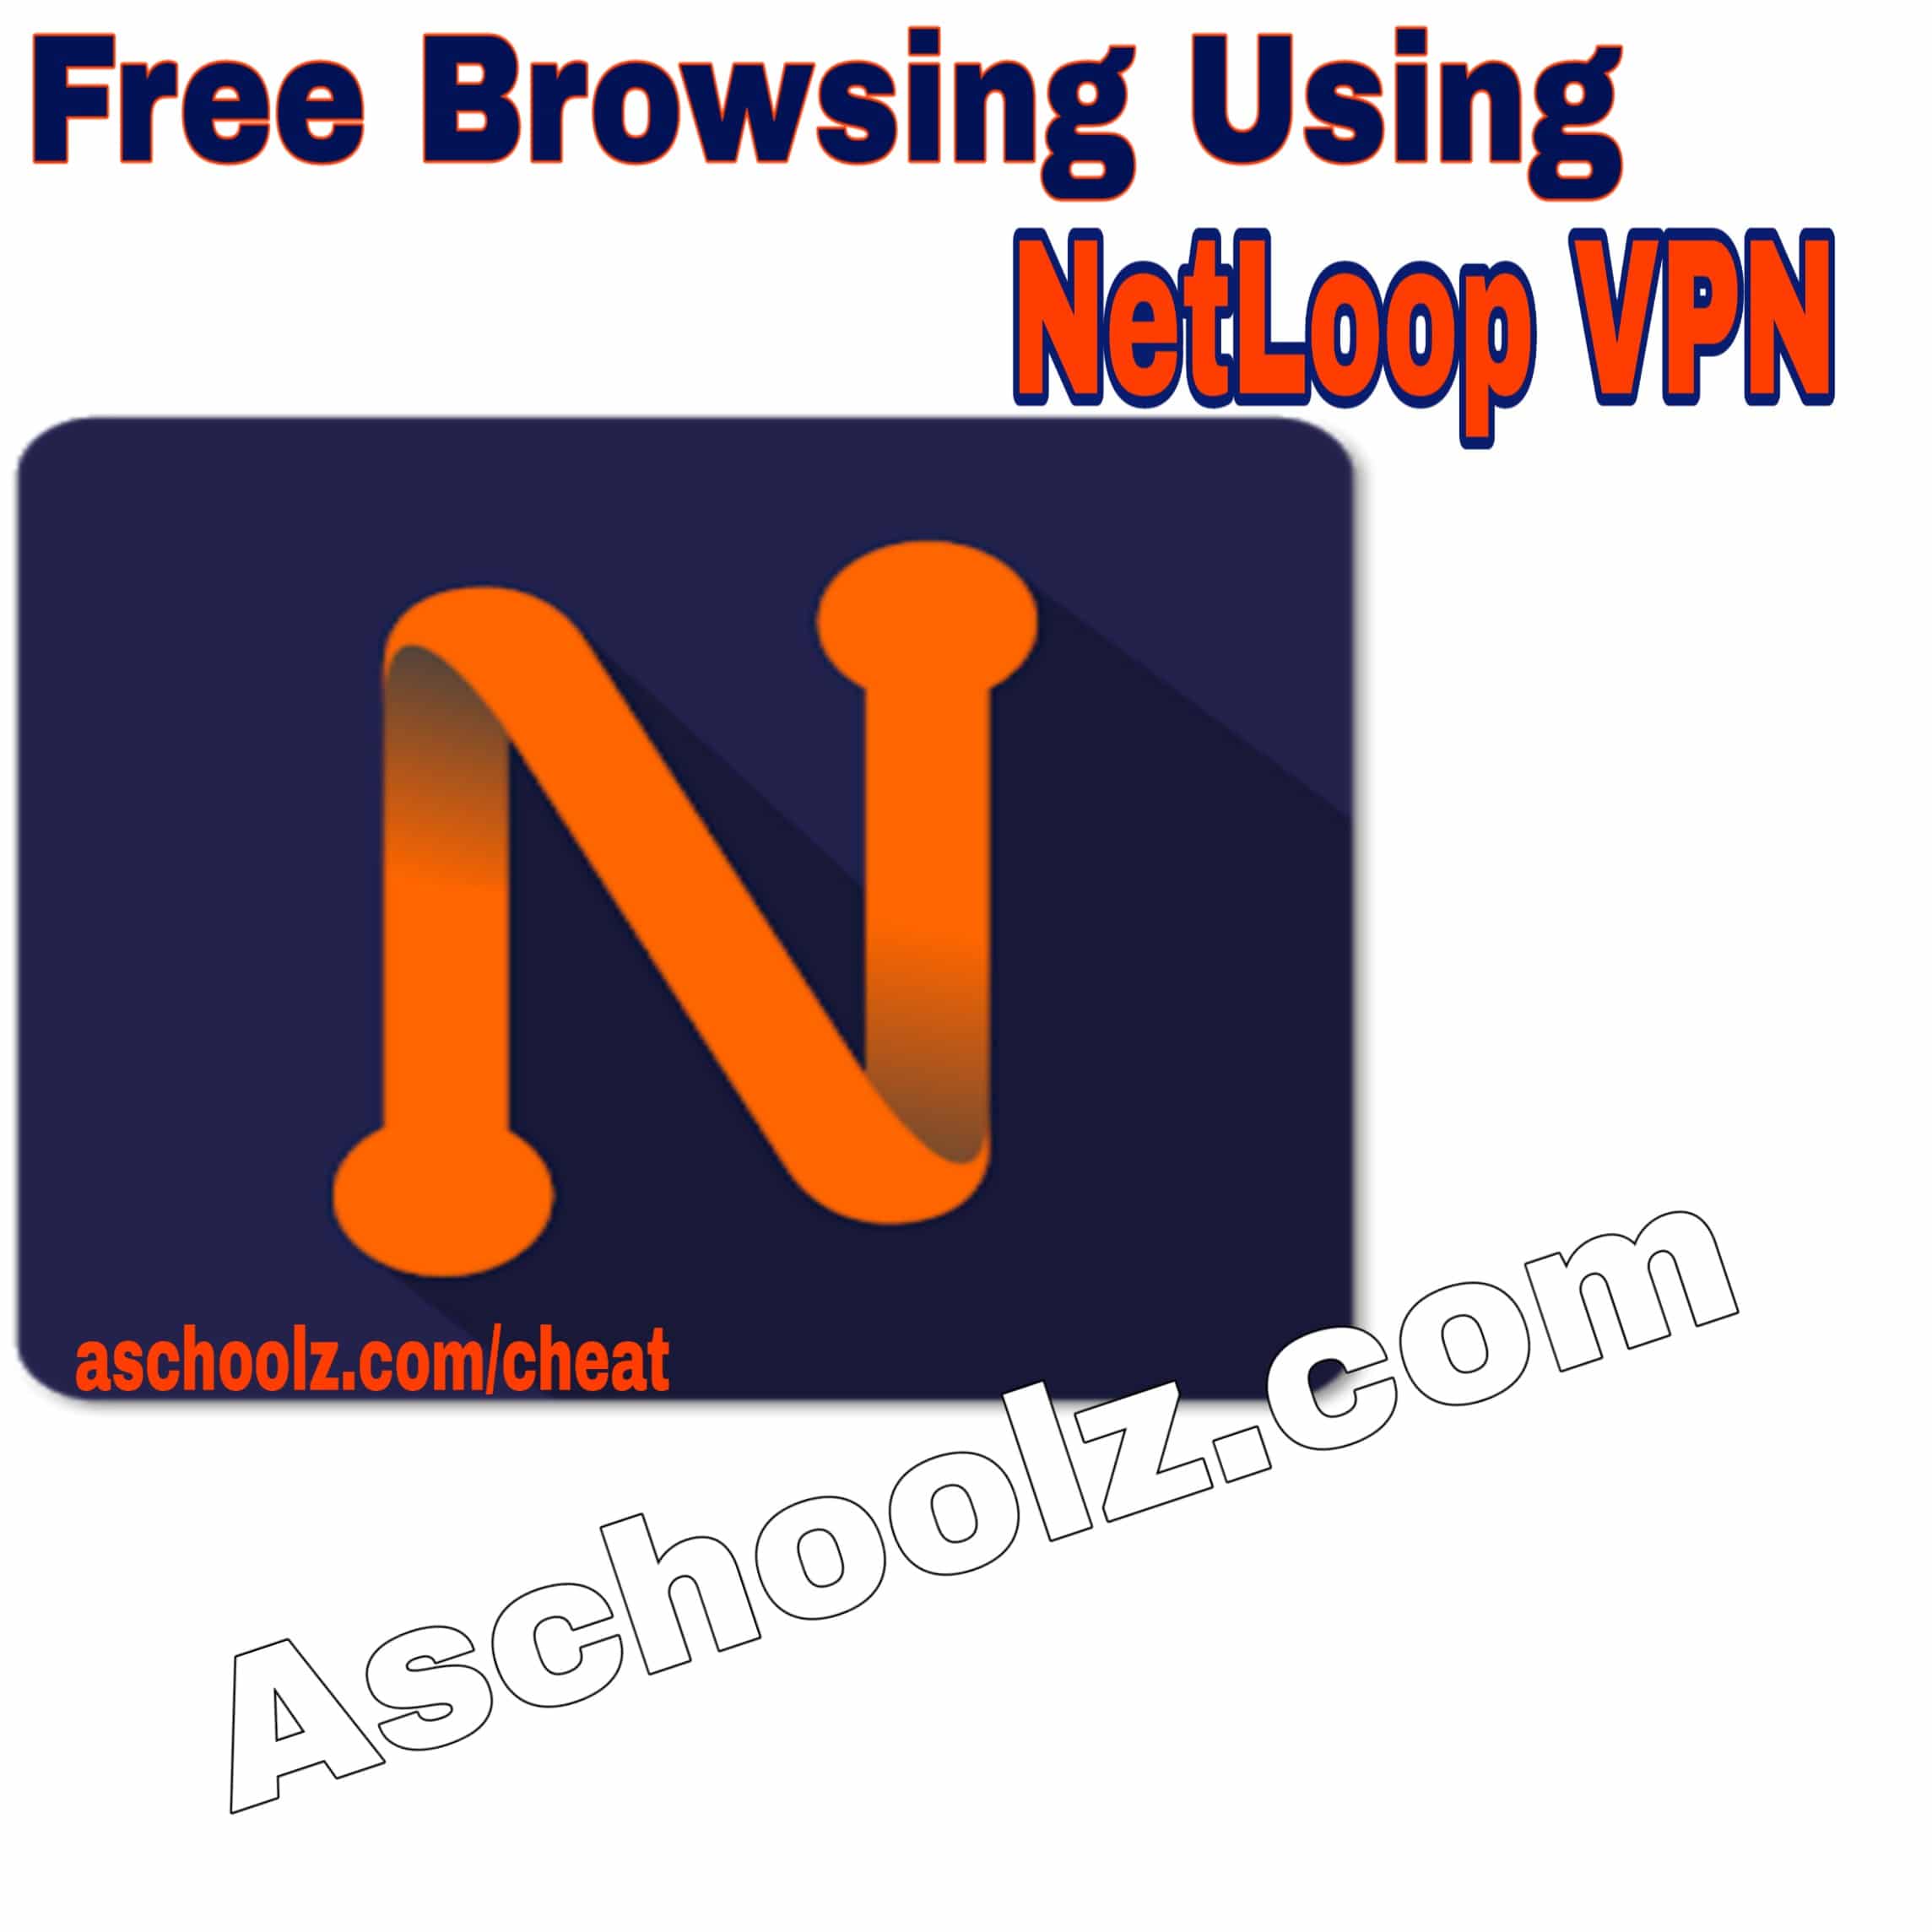 How to Browse free Using Netloop VPN